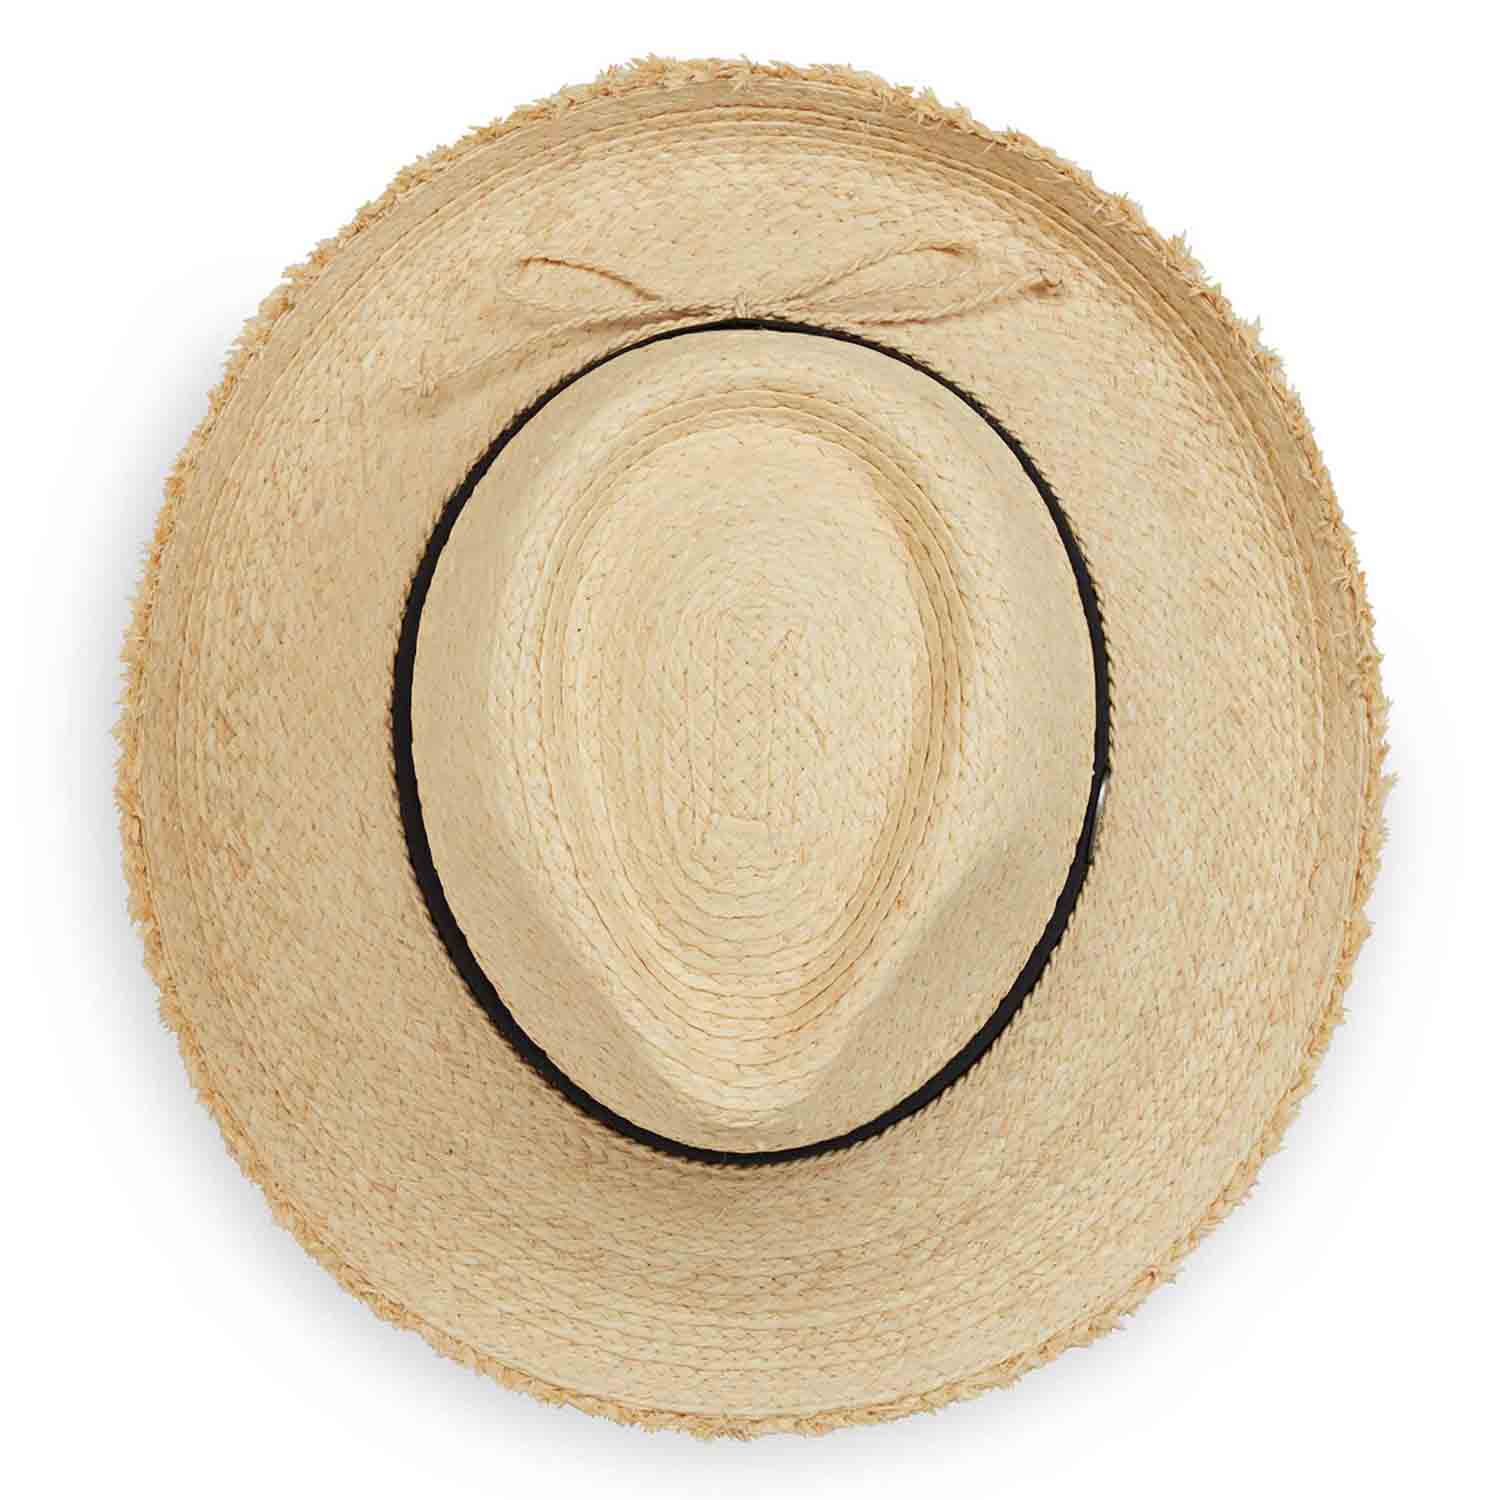 Paloma Frayed Brim Raffia Fedora Hat - Wallaroo Hats Fedora Hat Wallaroo Hats    